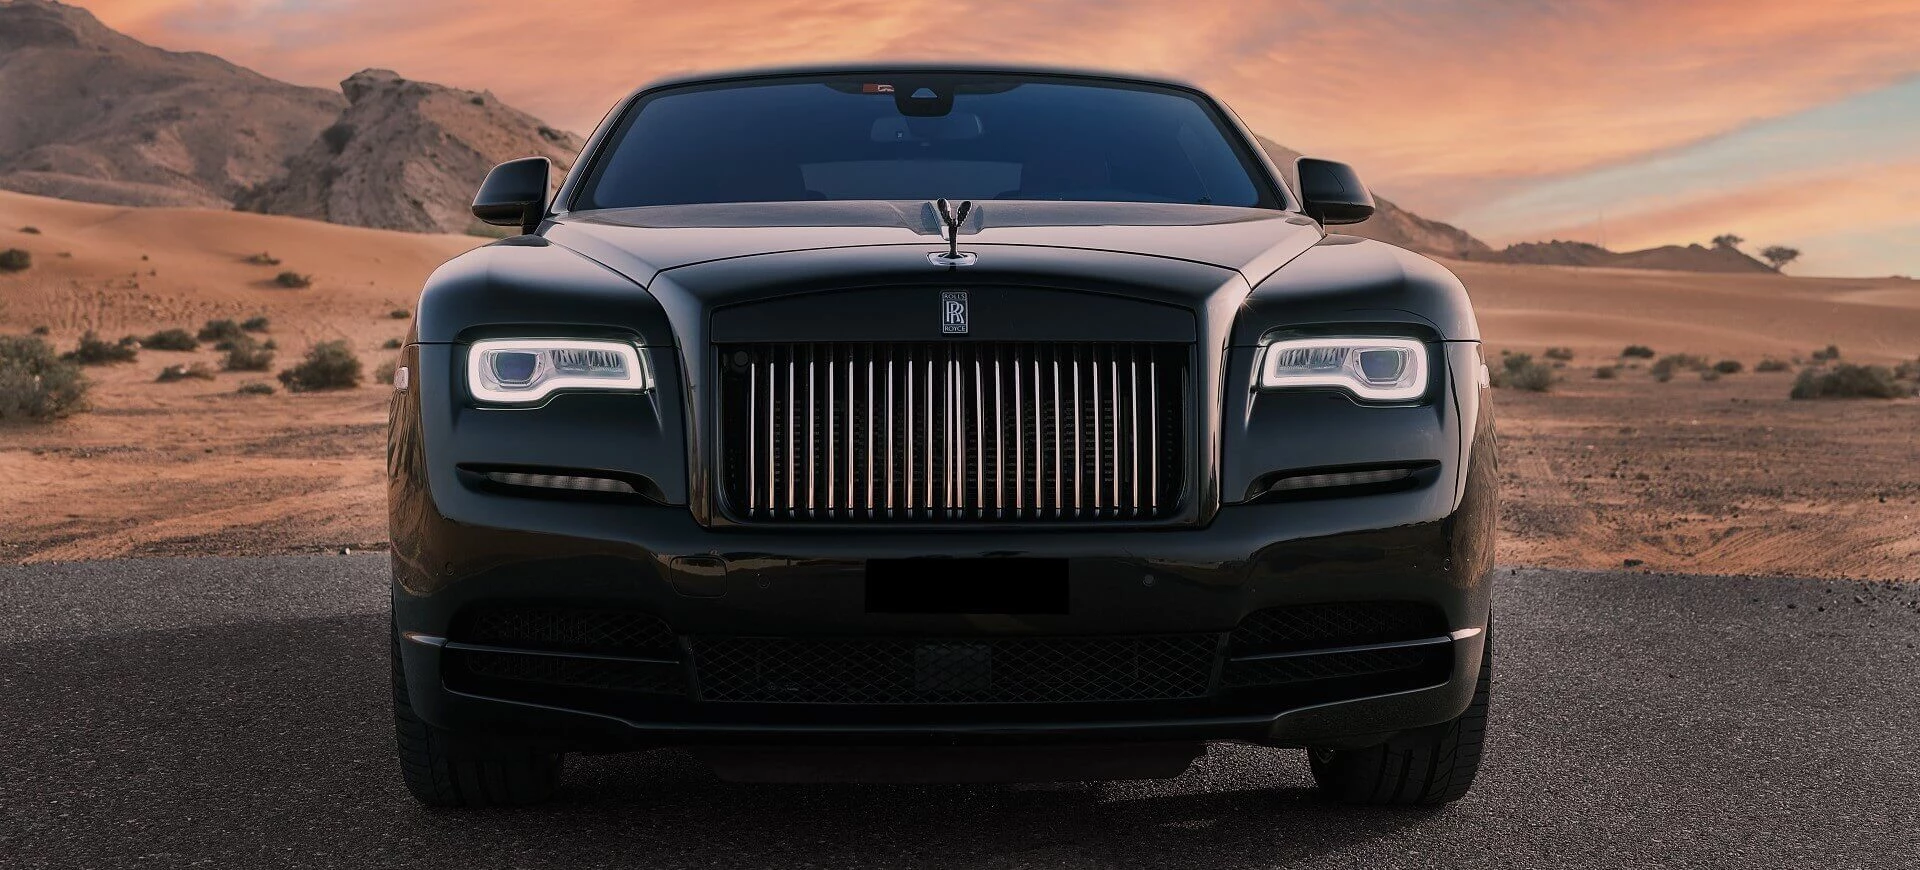 Rent Rolls Royce Wraith in Dubai